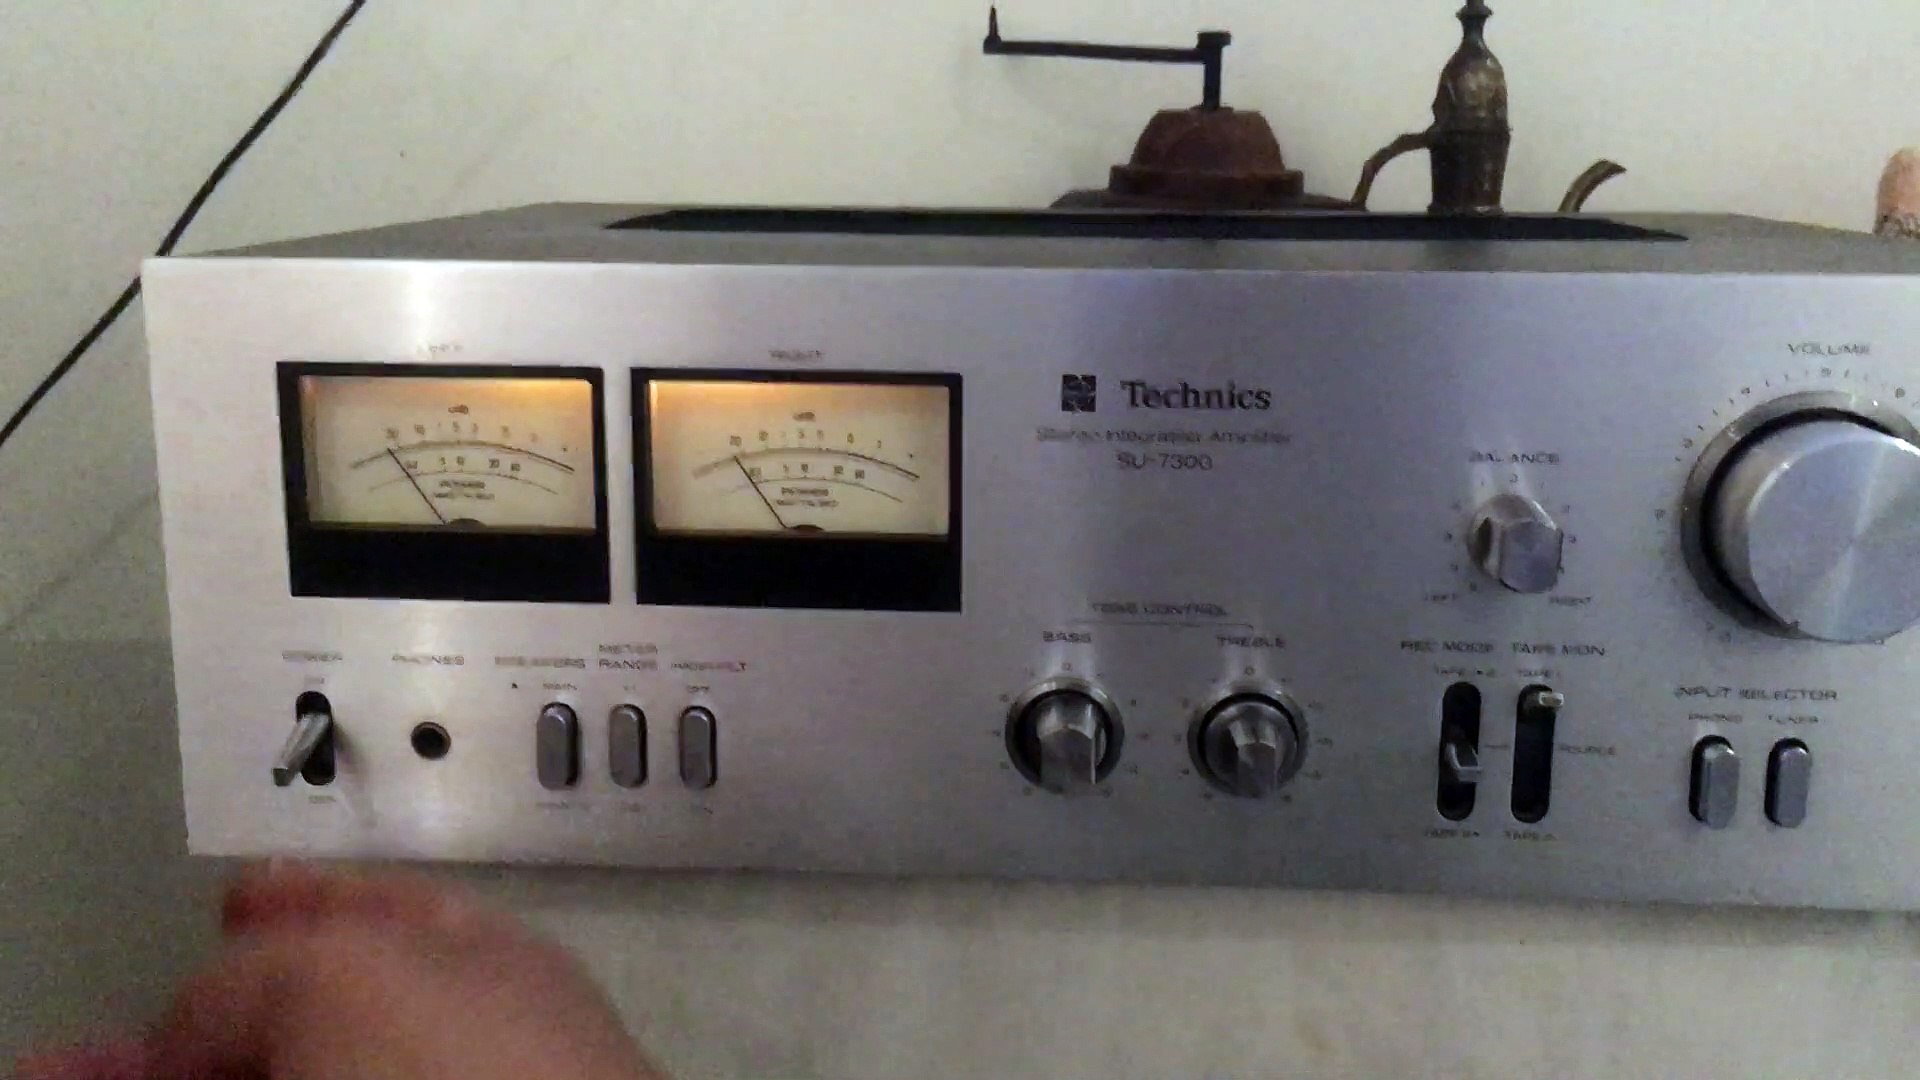 Technics SU-7300 integrated amplifier - video Dailymotion